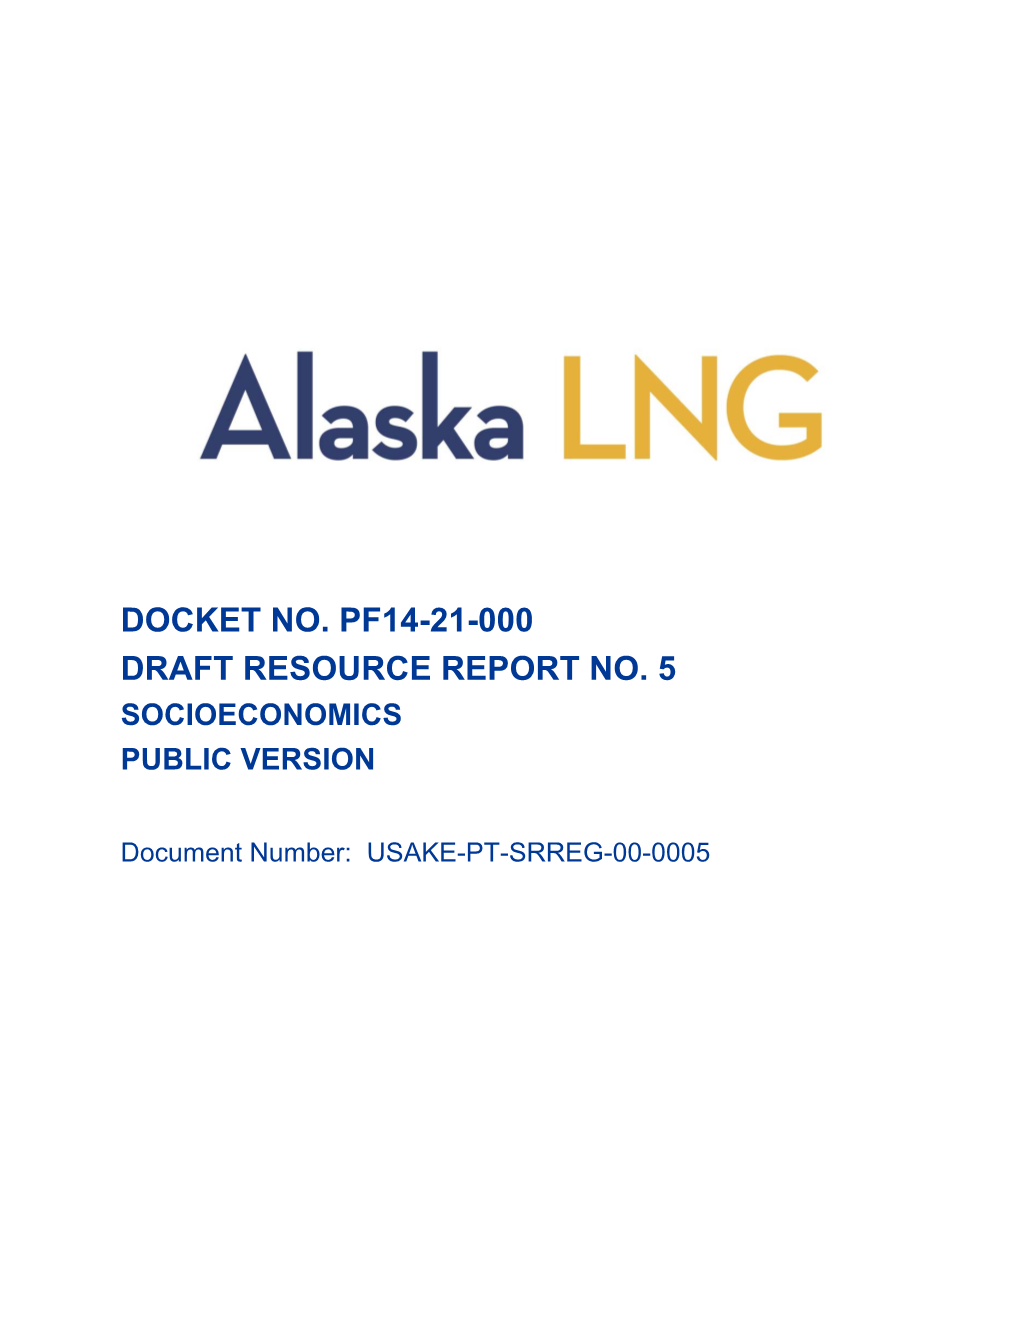 Alaska LNG, Docket No. PF14-21-000, Draft Resource Report